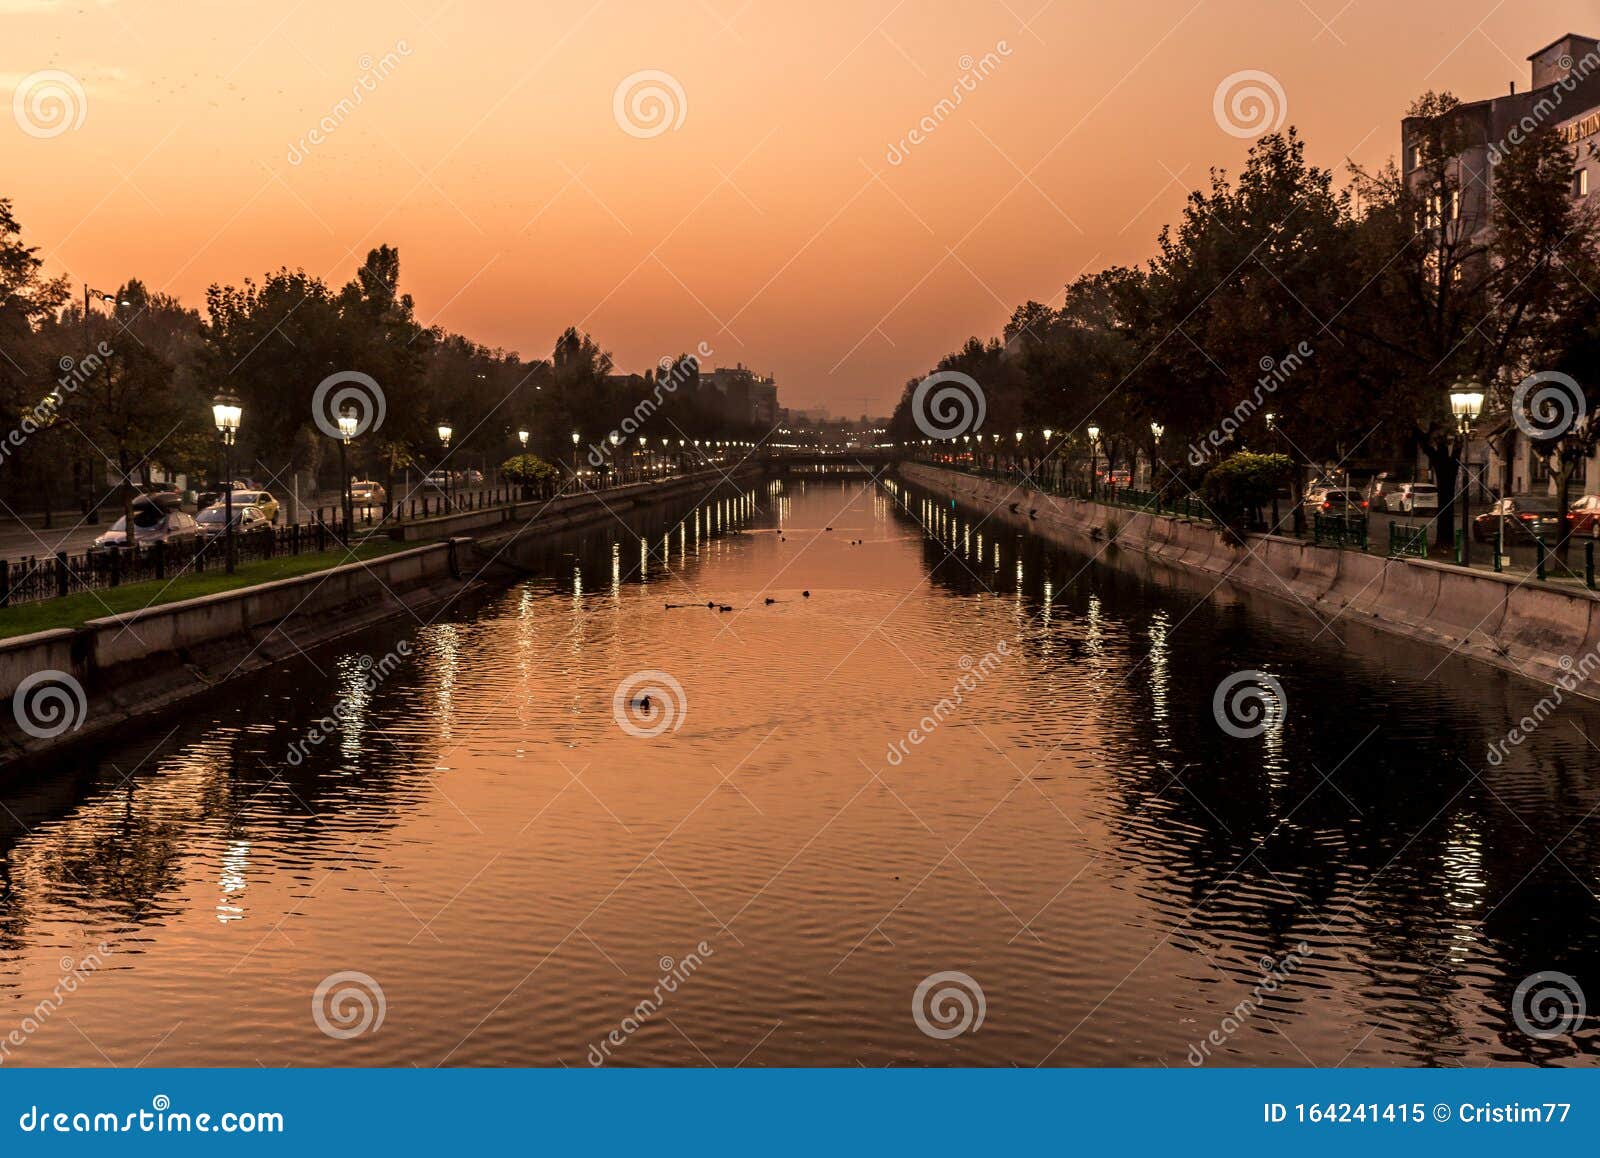 beautiful sunset bucharest romania bucuresti dambovita river landscape reflection